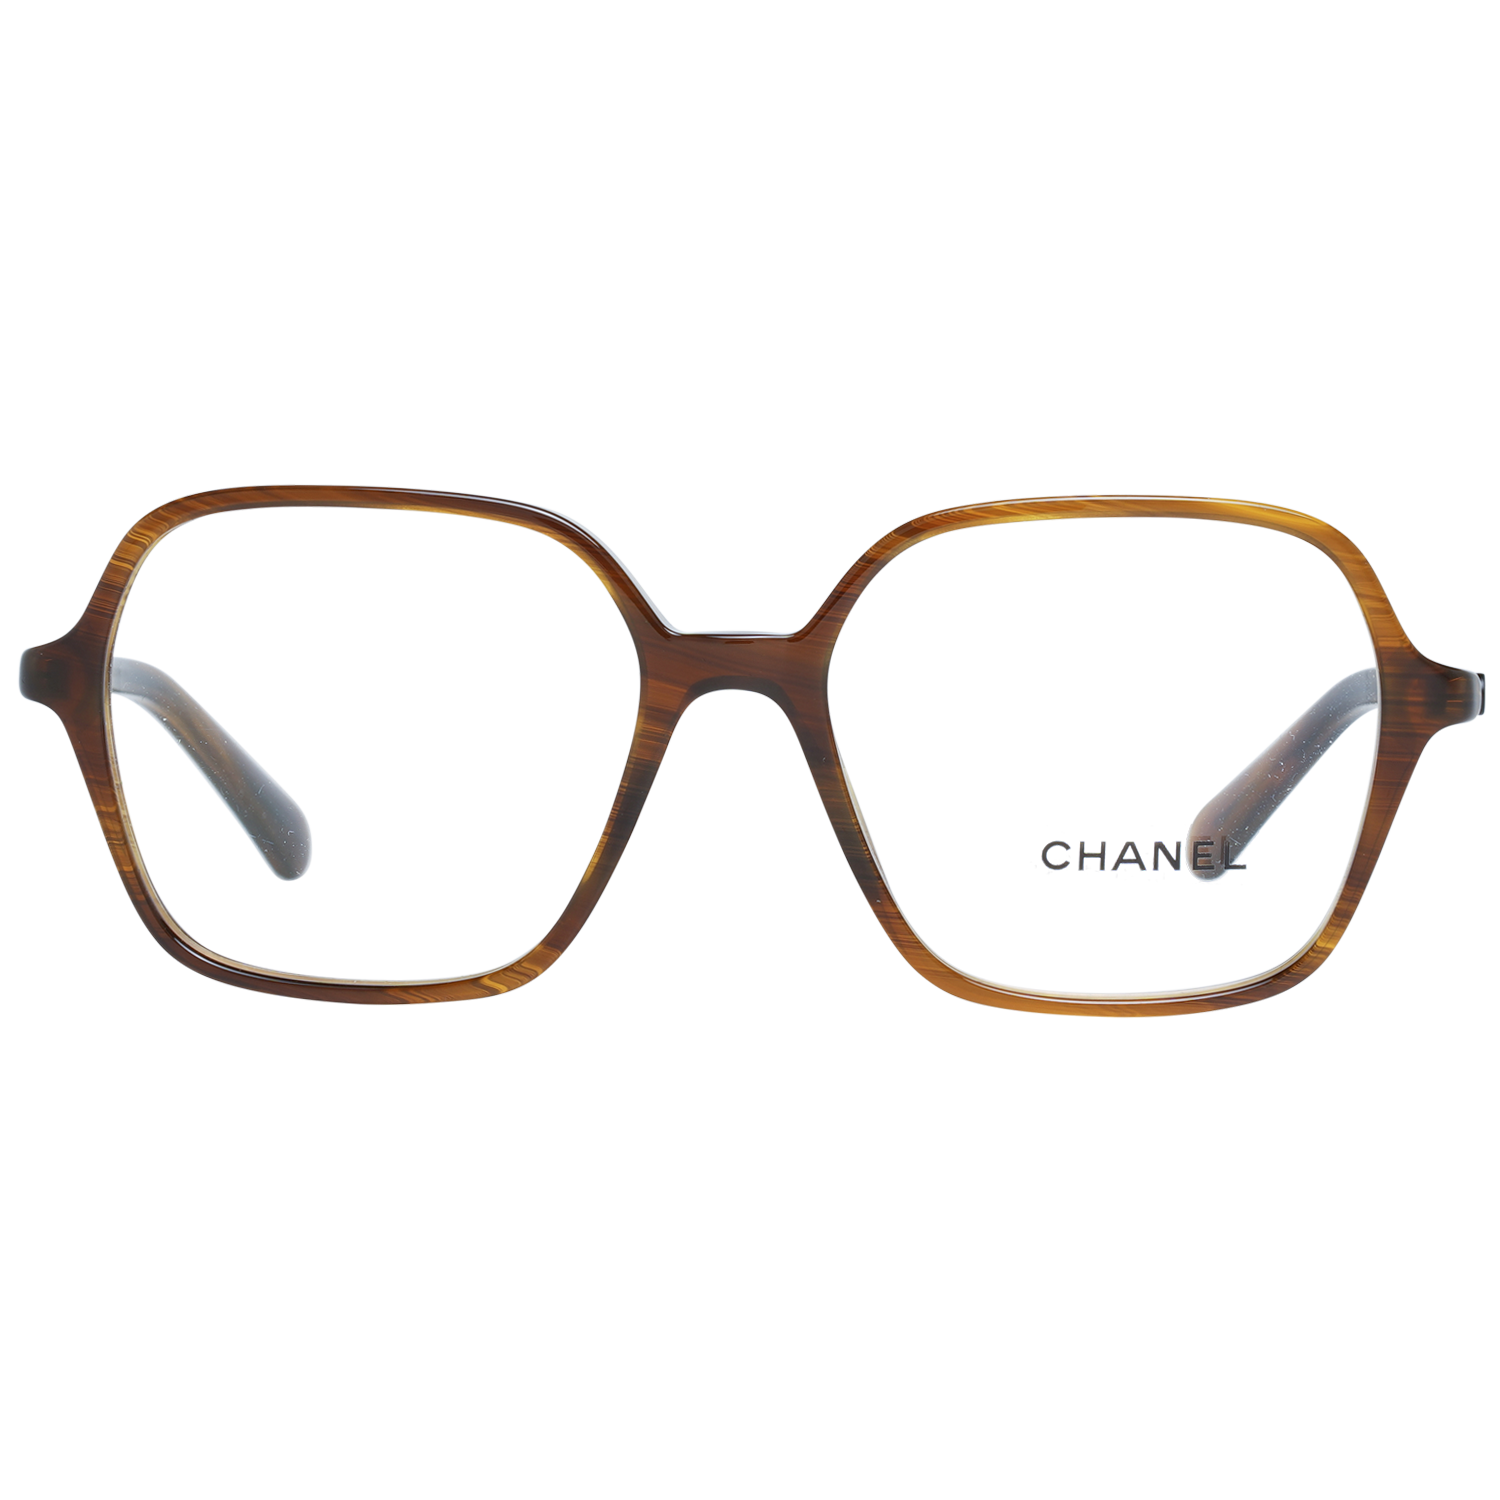 Chanel Frames Chanel Glasses Frames 0CH3417 1695 53mm Eyeglasses Eyewear UK USA Australia 